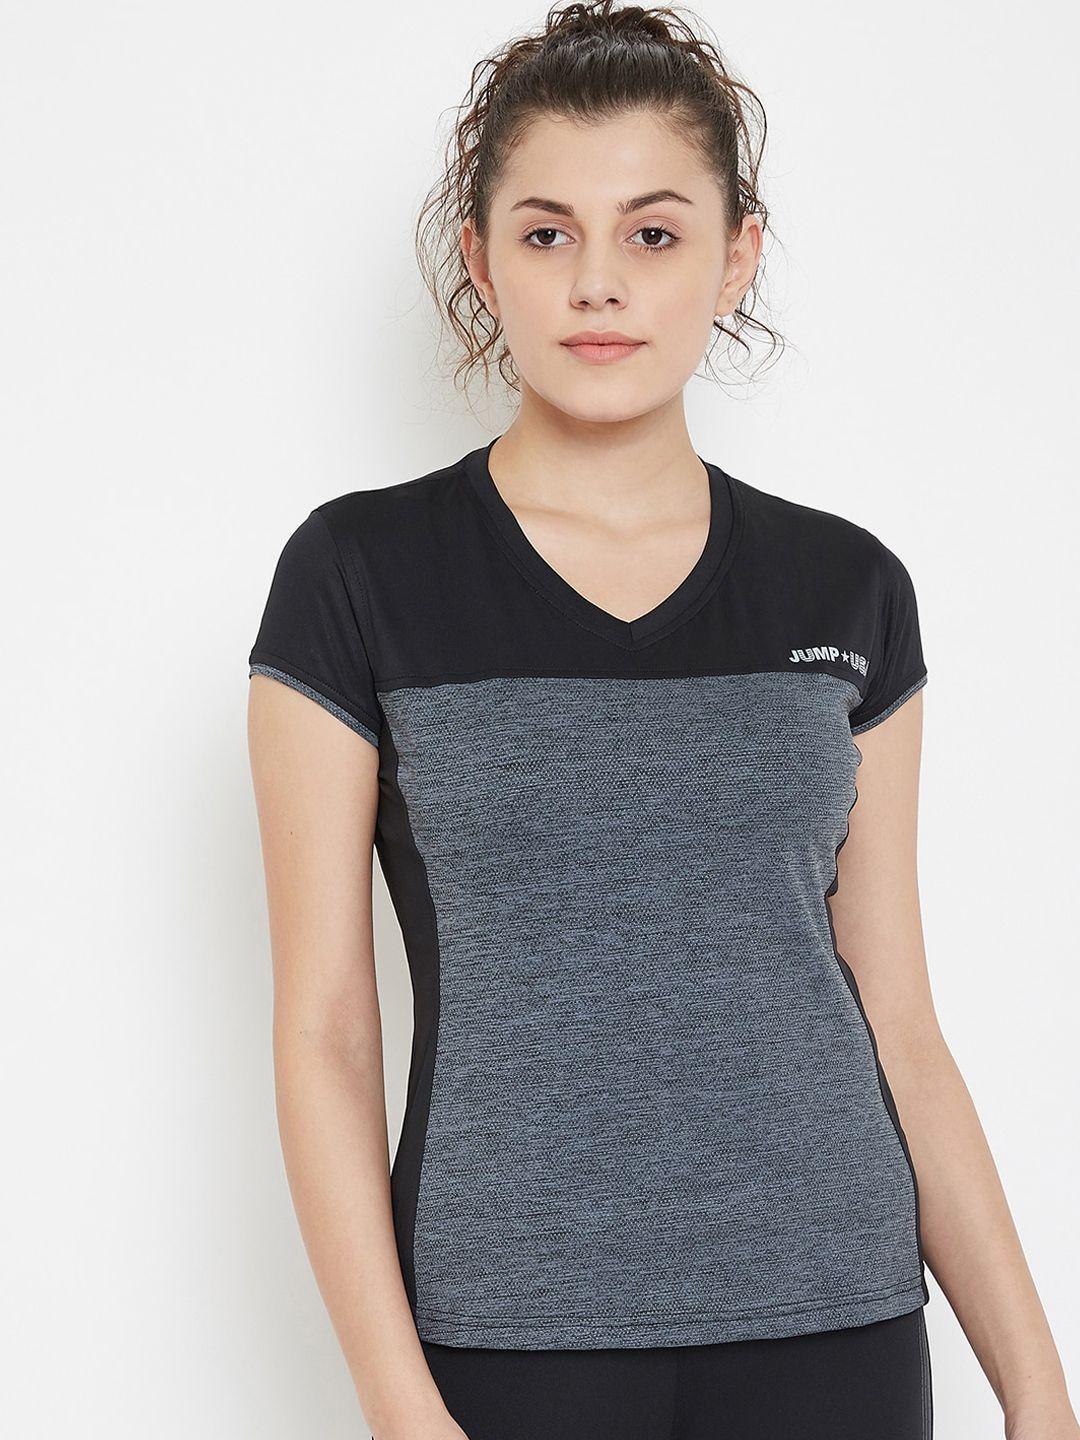 jump usa women black & grey colourblocked v-neck t-shirt